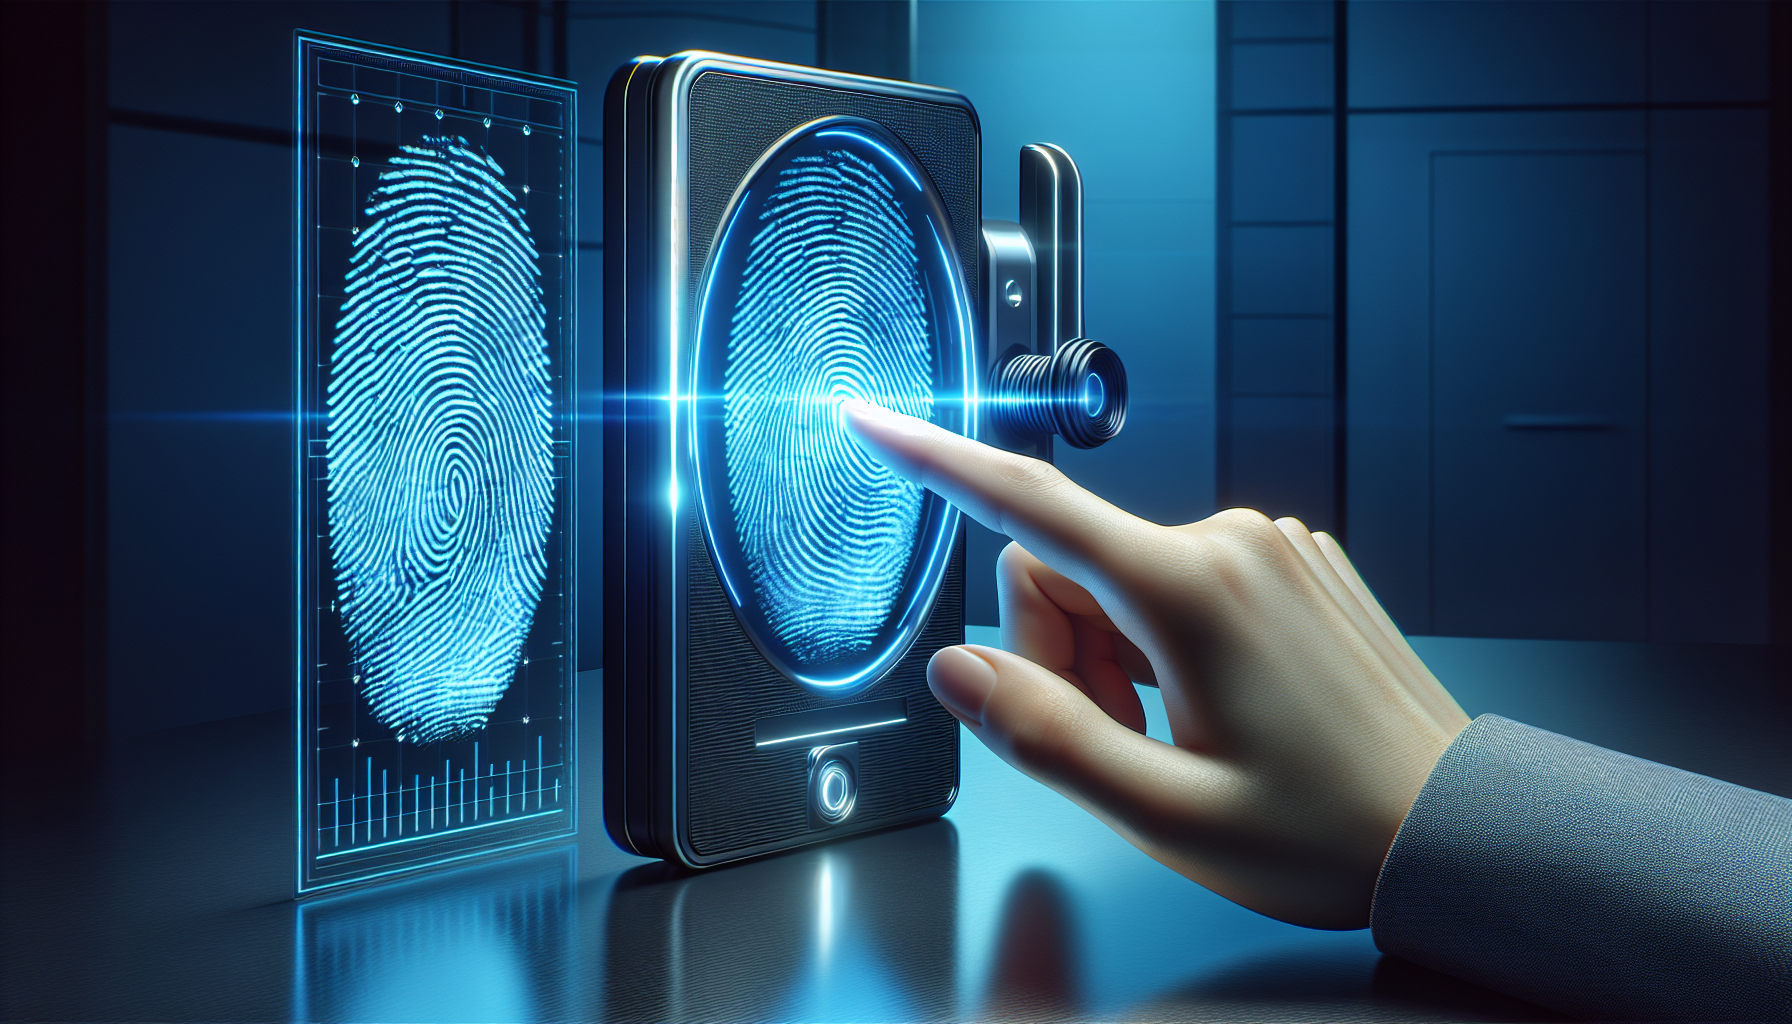 Illustration of electronic fingerprint capture